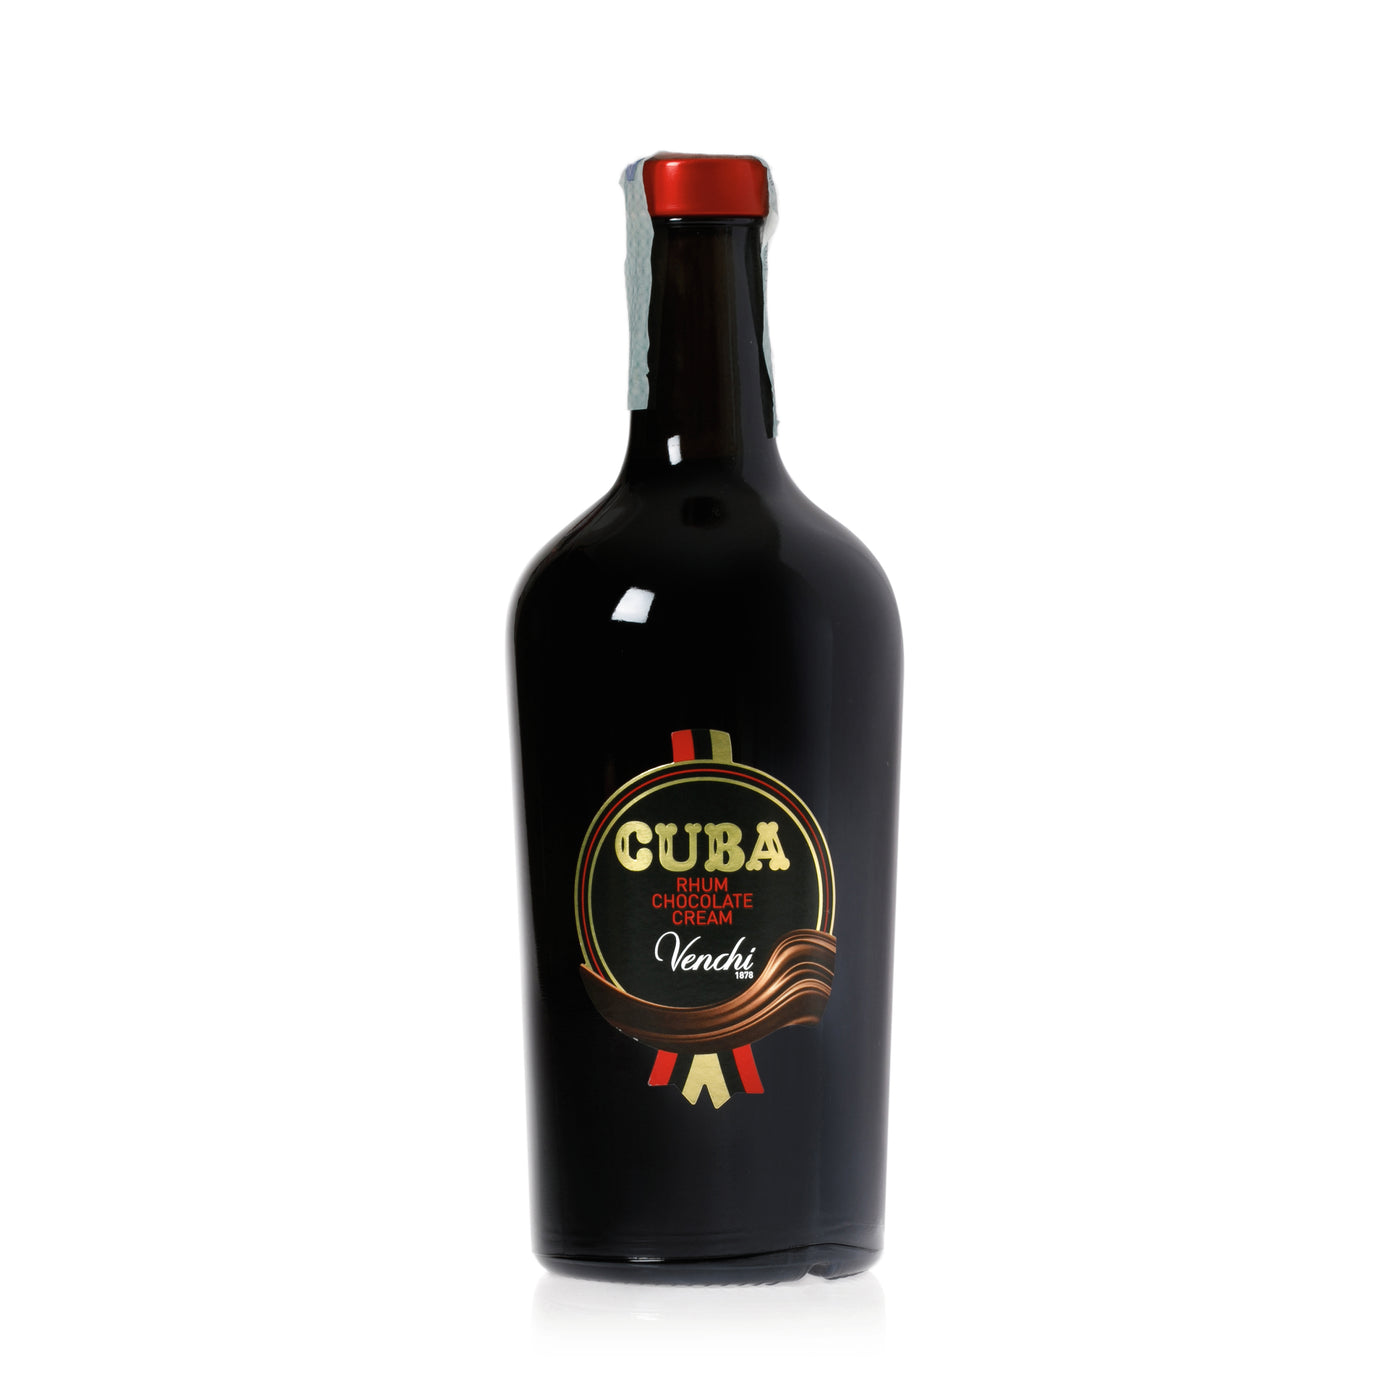 Cuba Rhum Liquor 70 cl